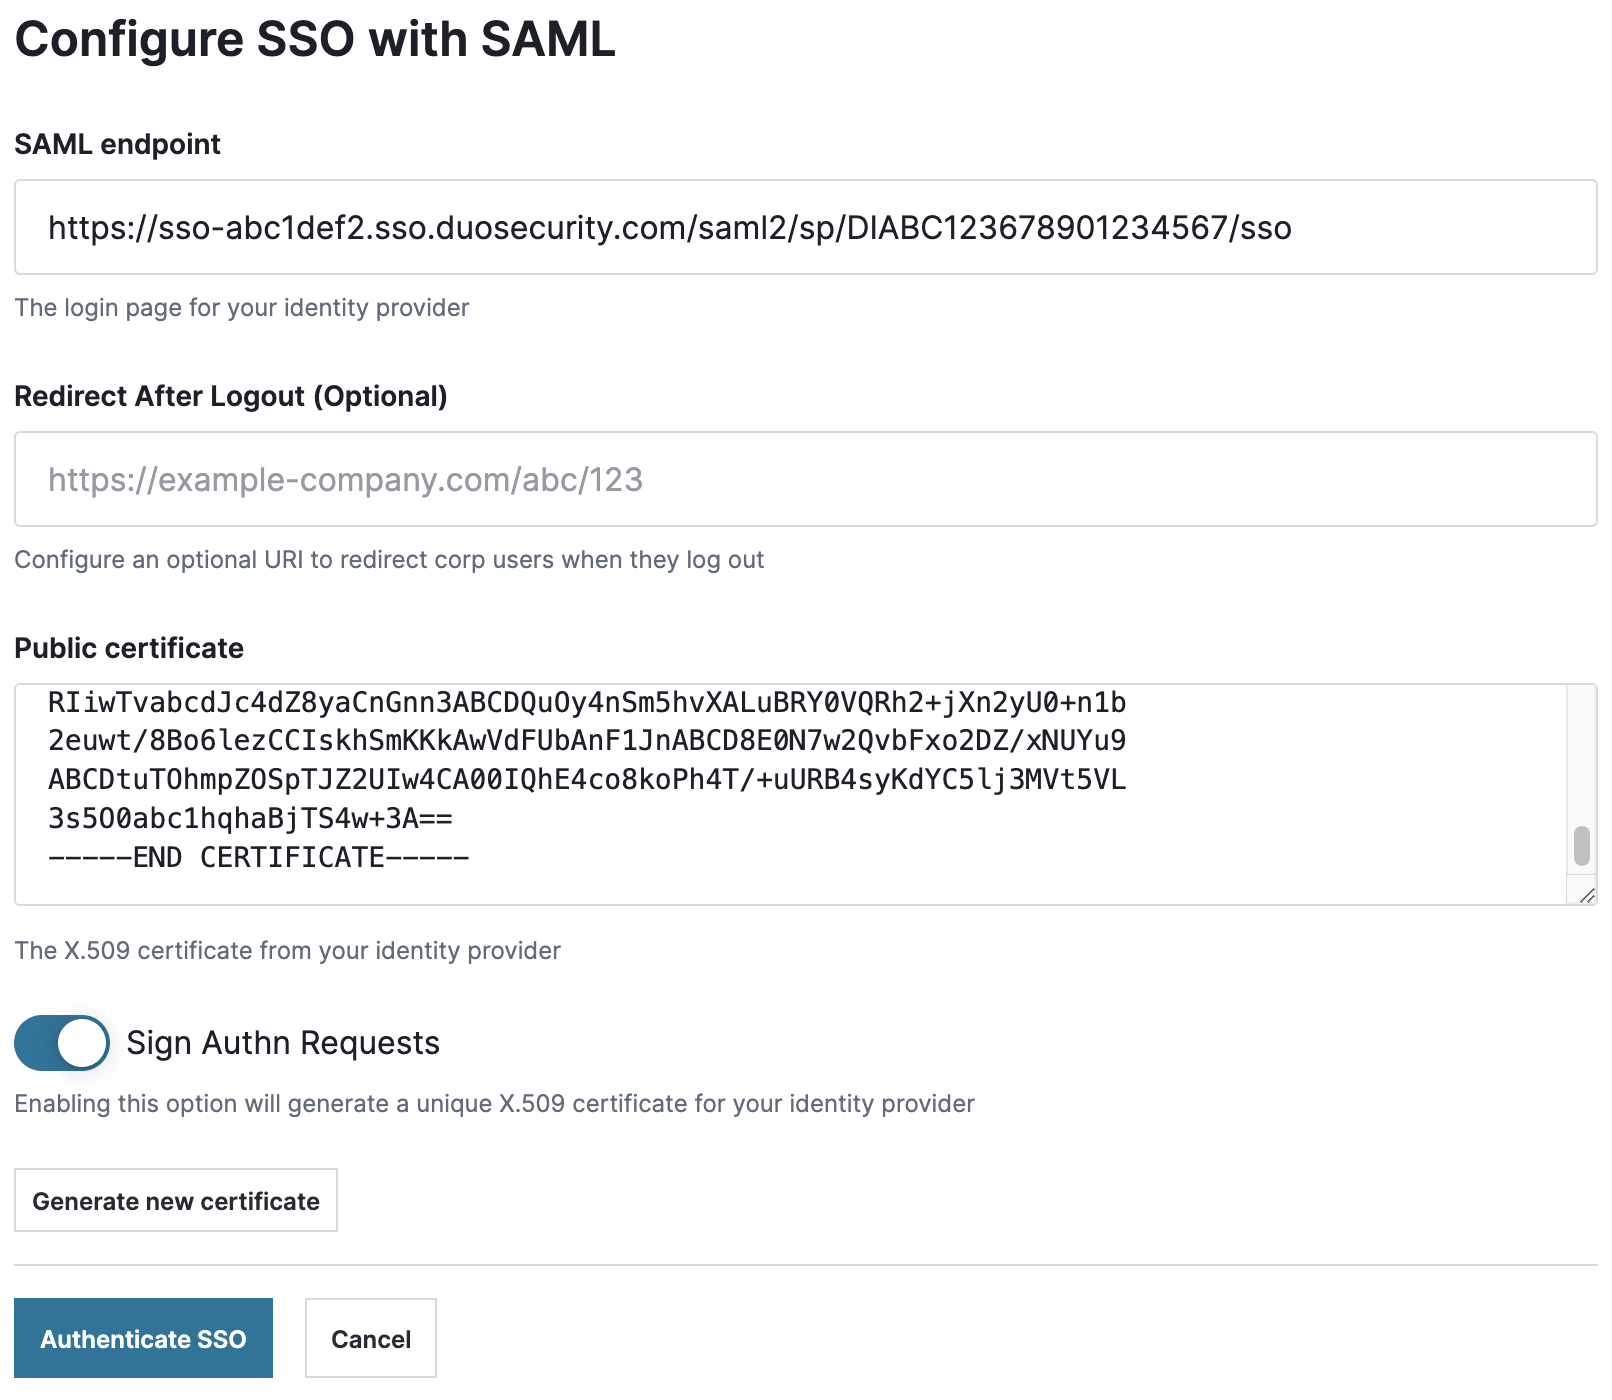 Signal Sciences Configure SSO with SAML Window